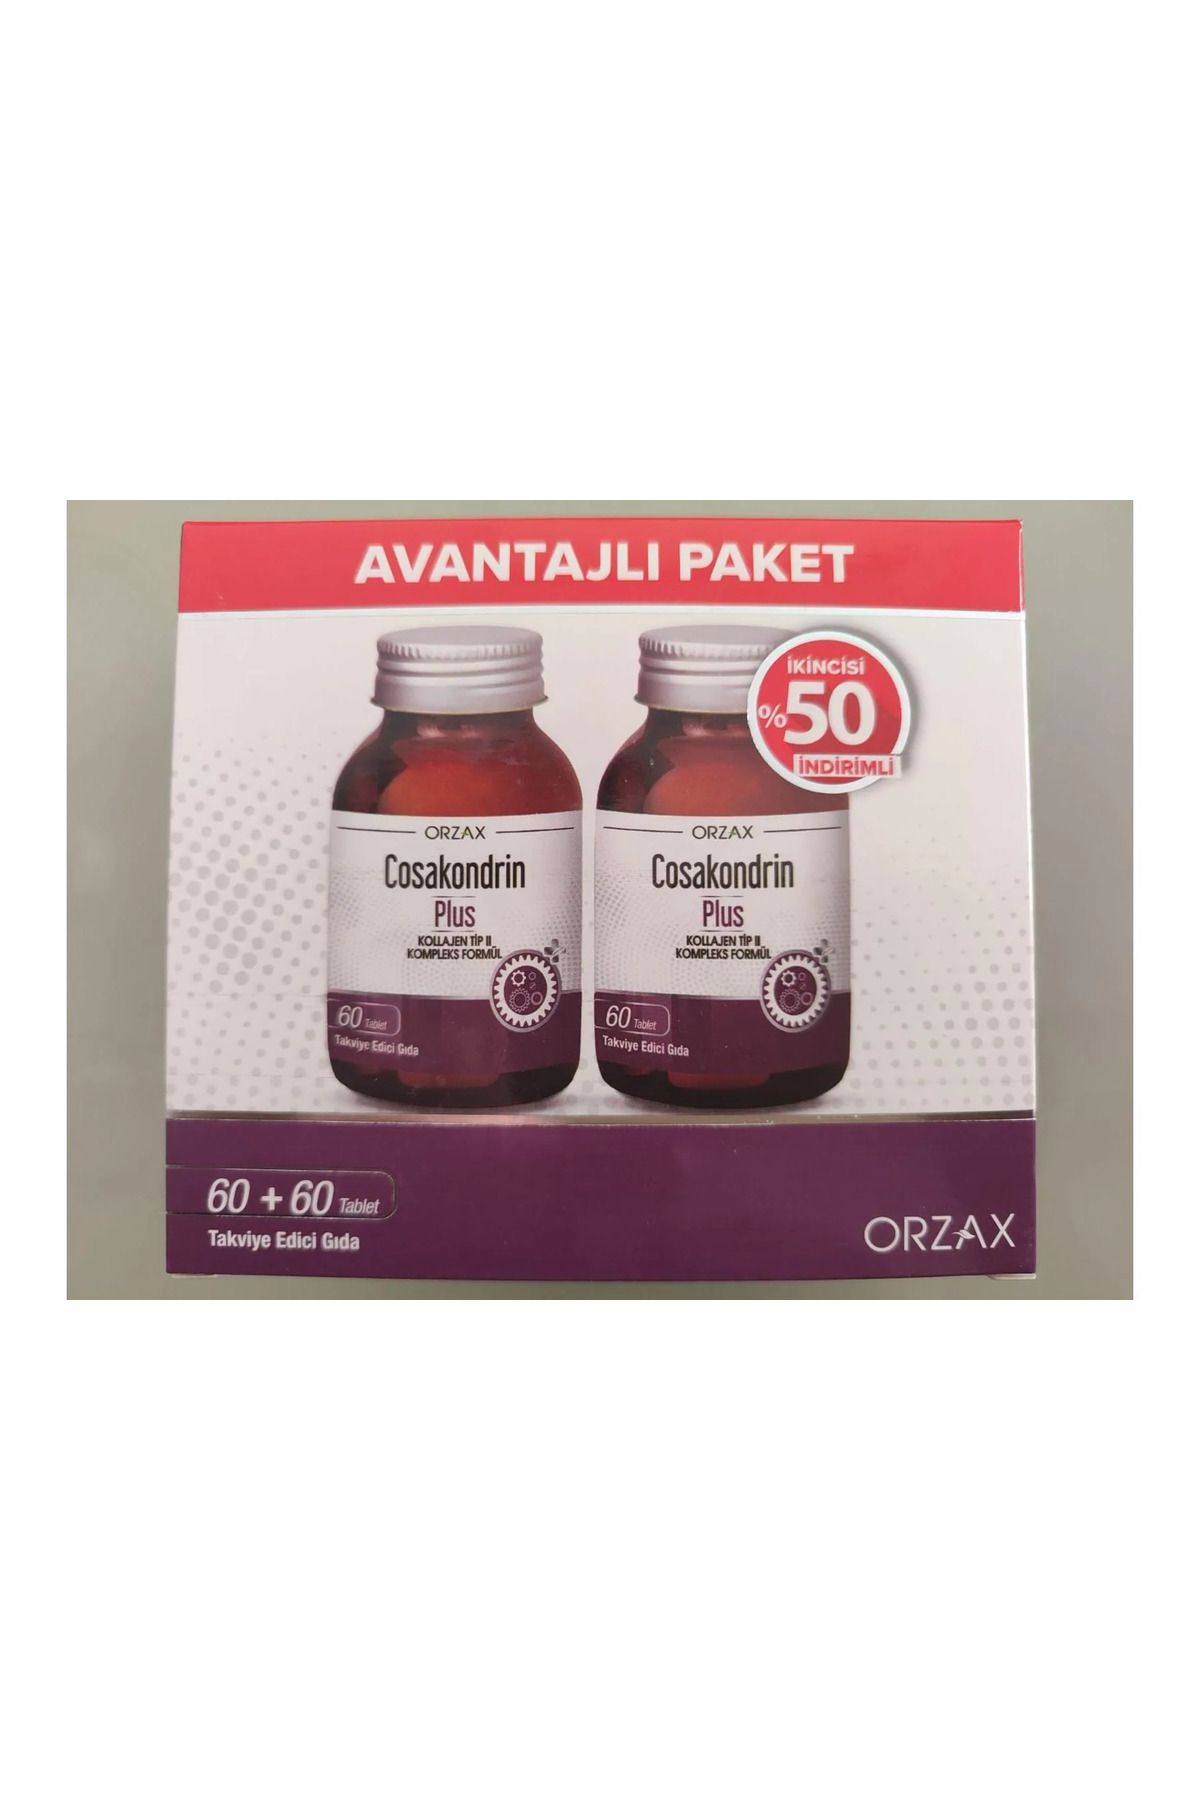 Orzax Cosakondrin Plus 60 Tablet - İkincisi %50